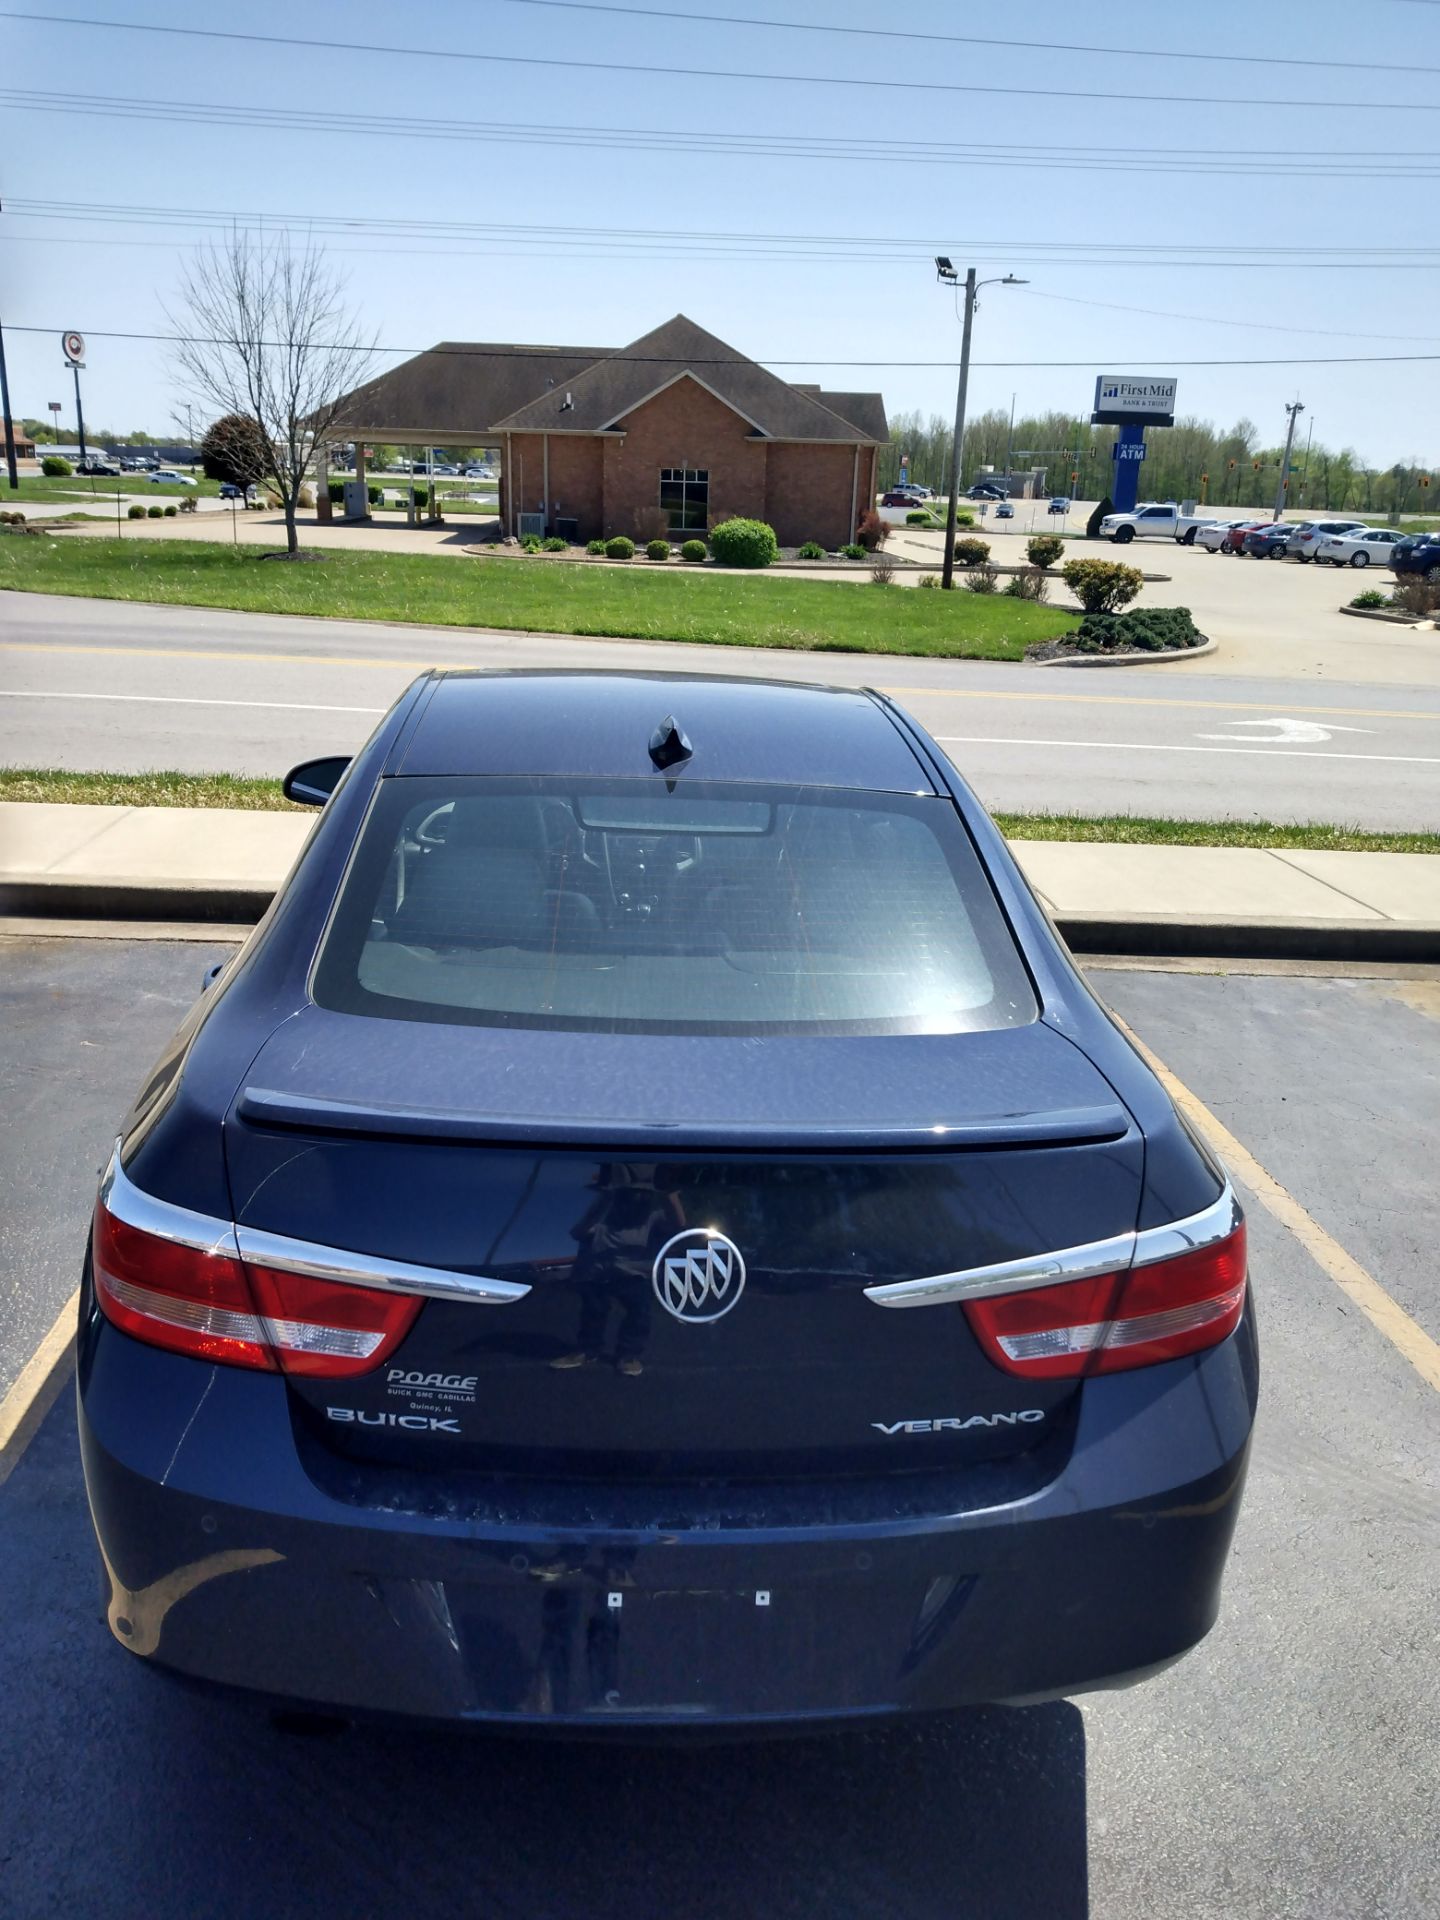 2016 Buick VERANO in Marion, Illinois - Photo 1